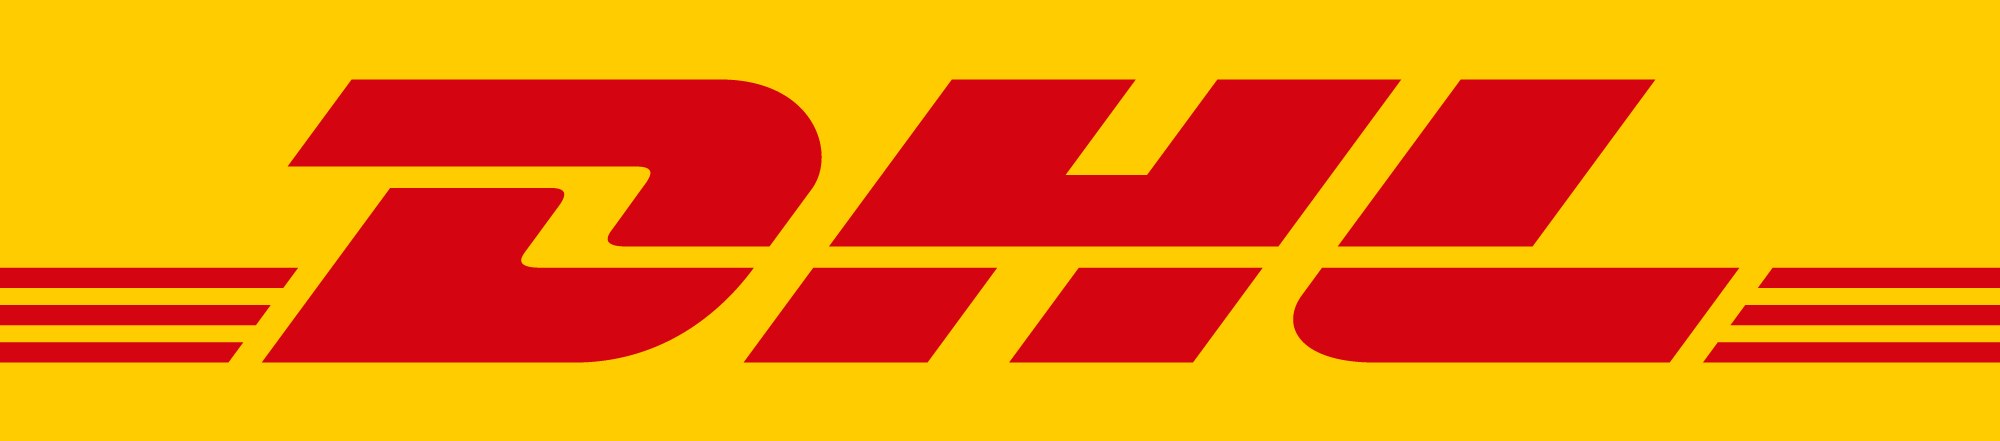 DHL_logo_rgb-1